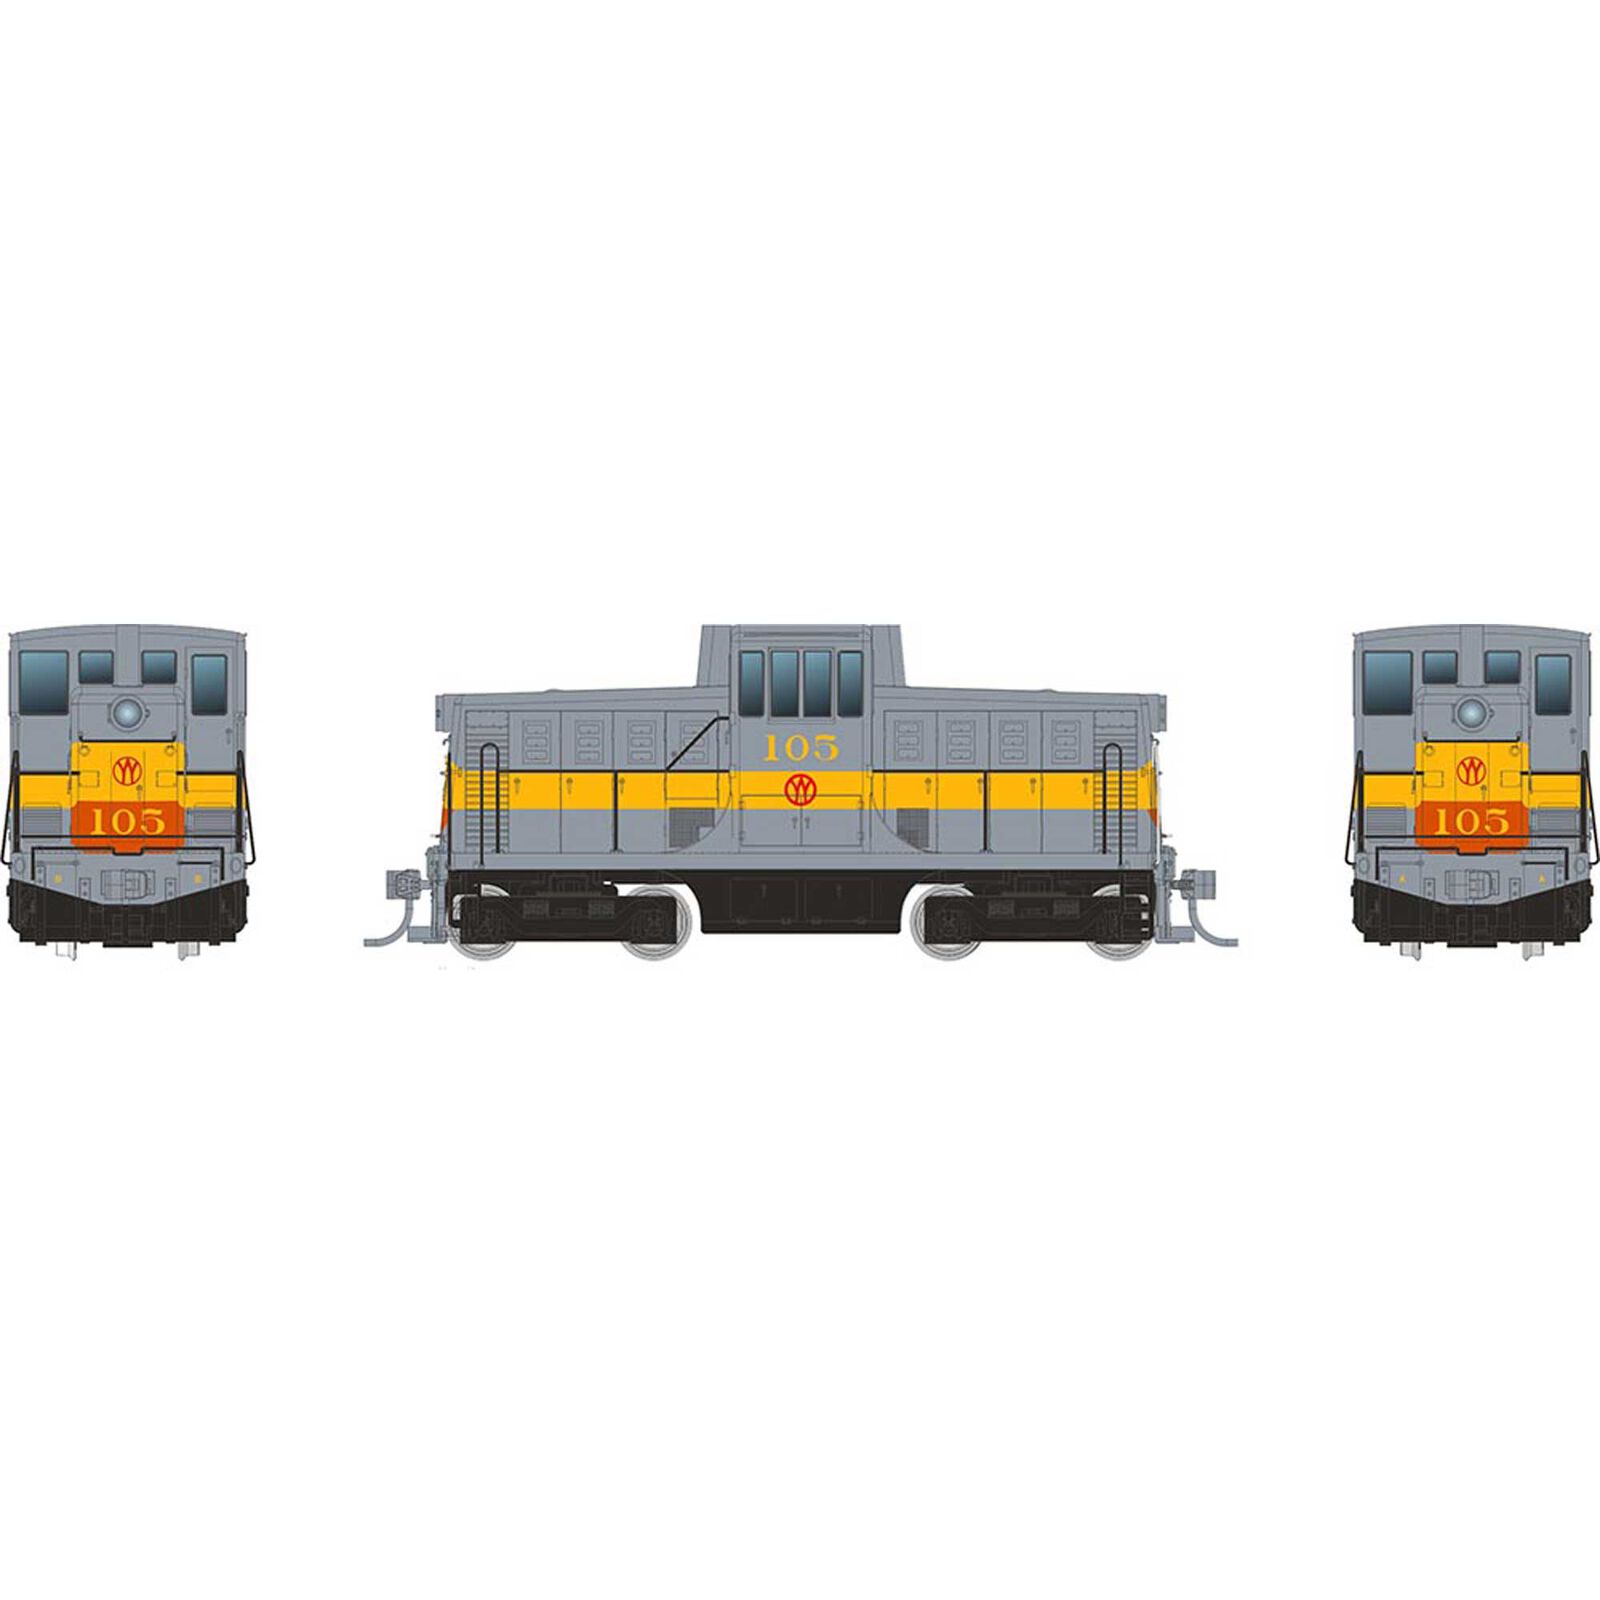 HO GE 44 Tonner Switcher Locomotive, NYO&W Grey #103